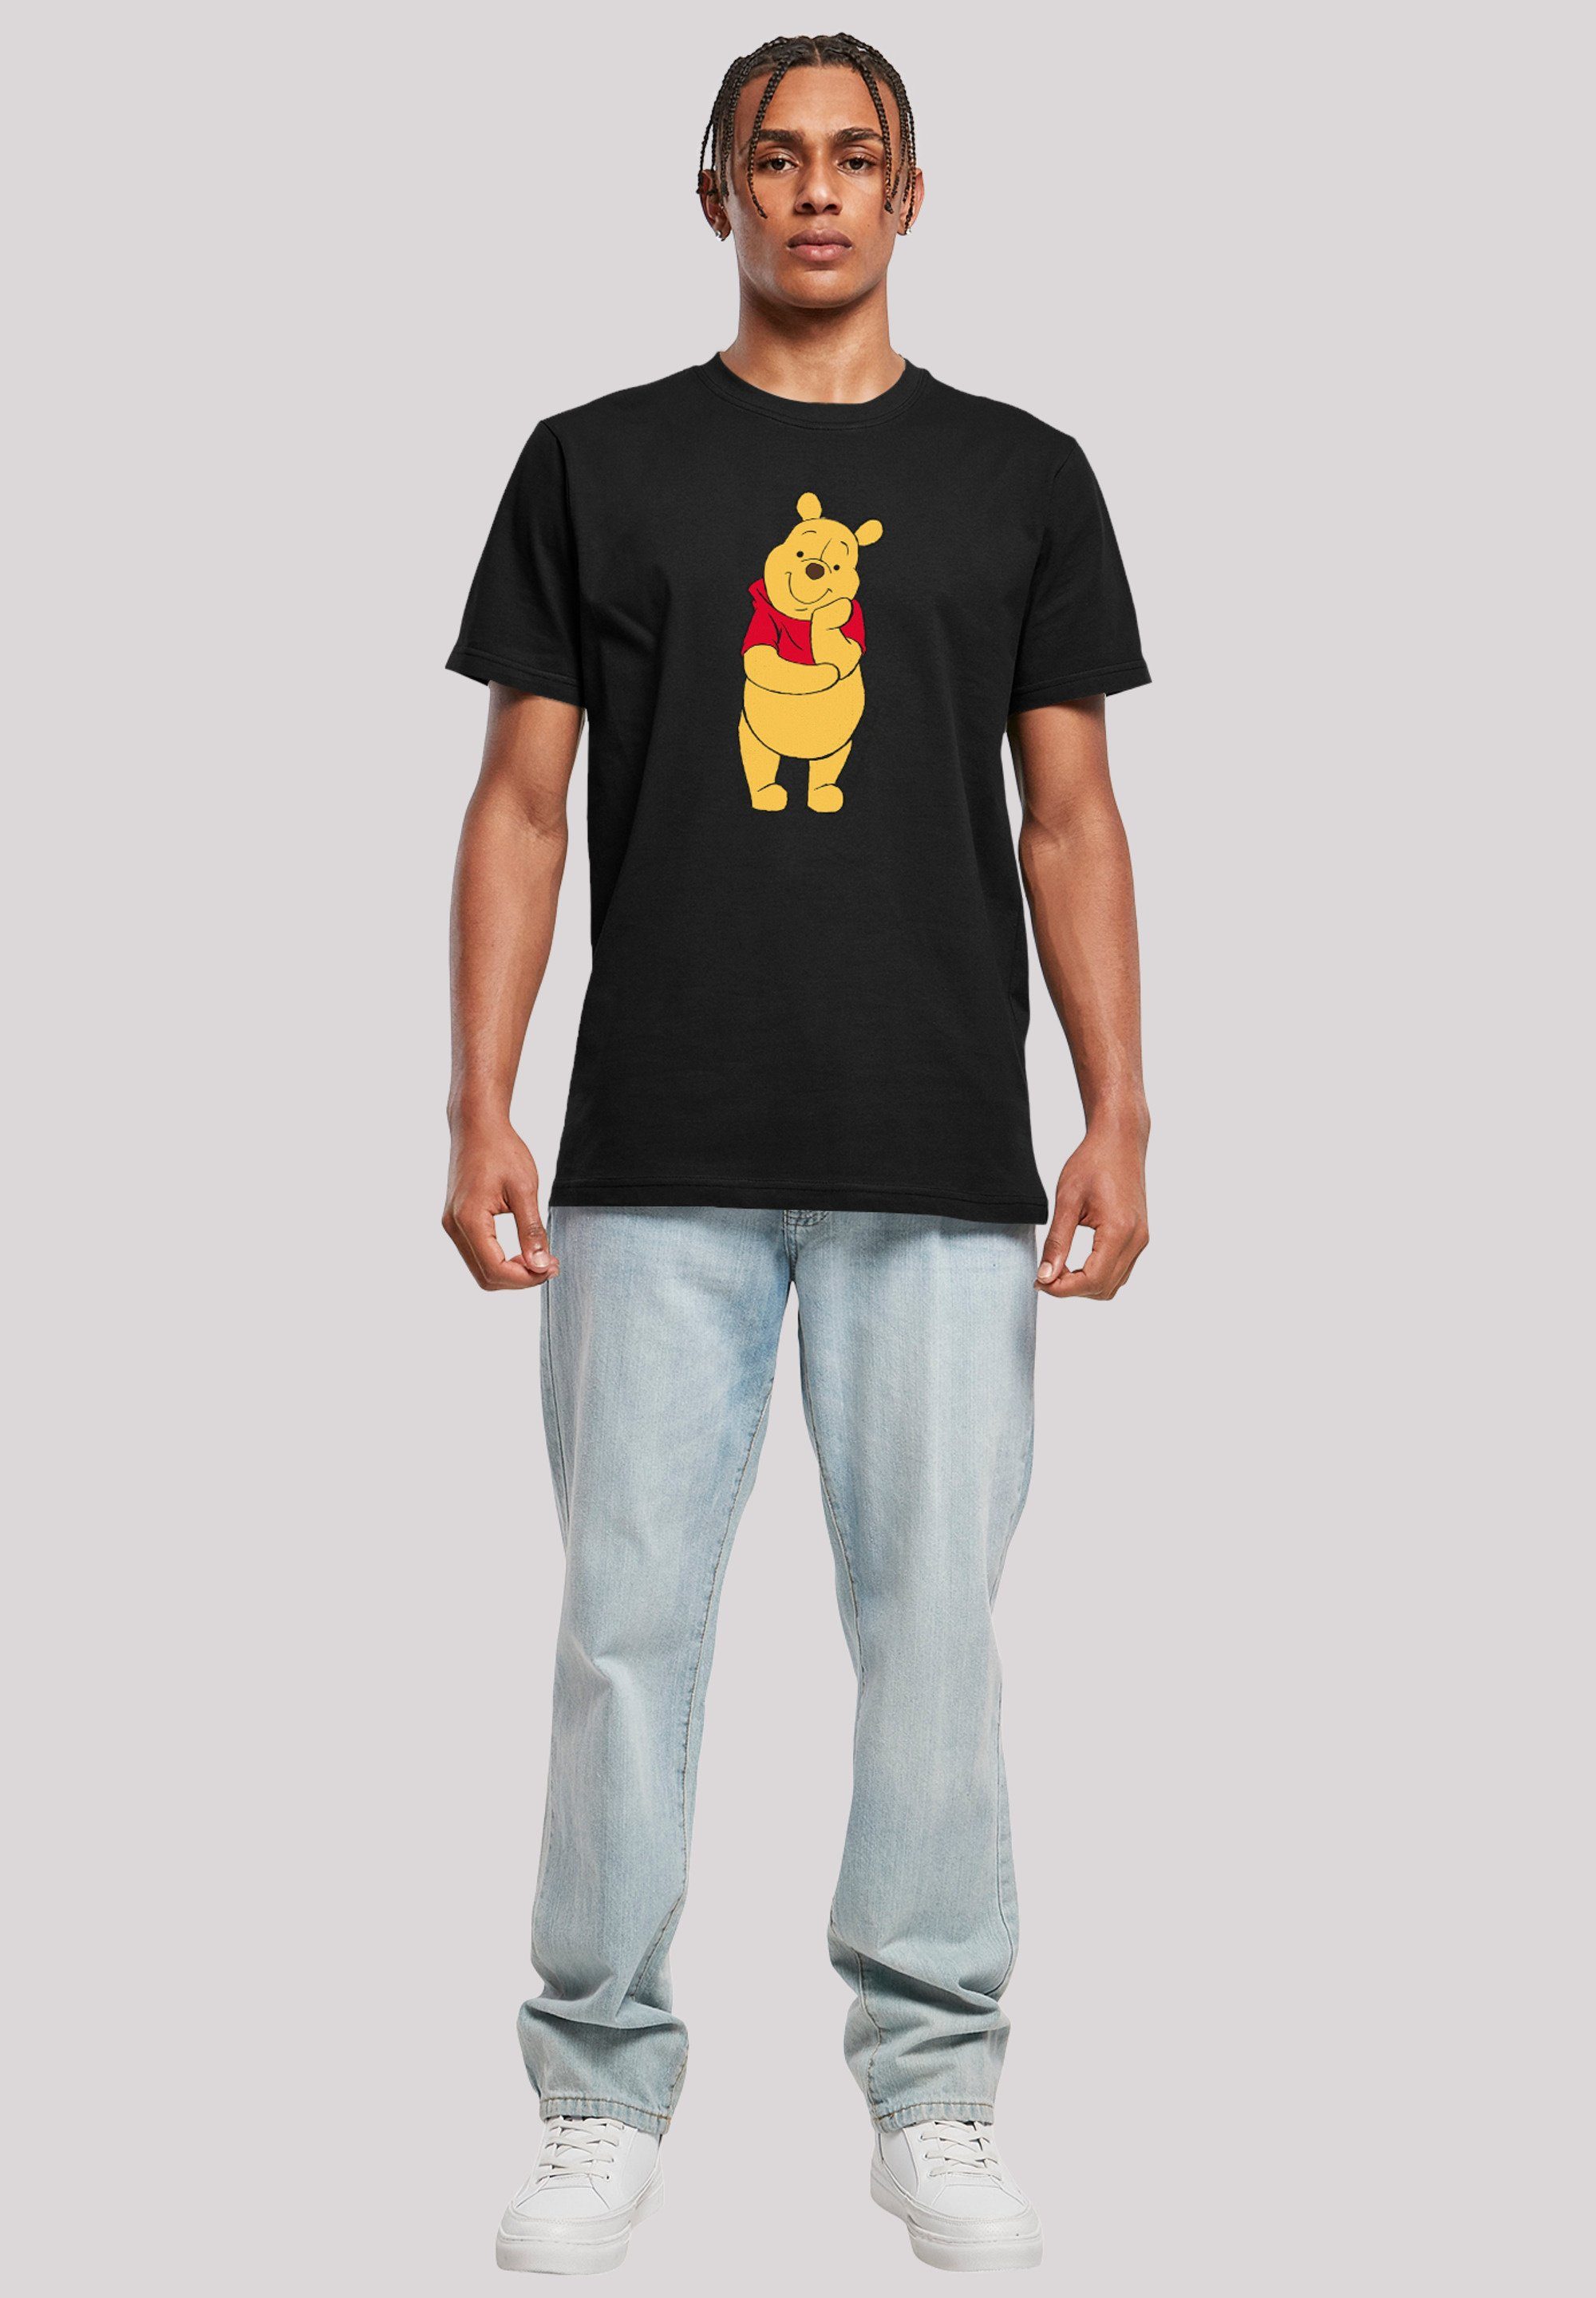 F4NT4STIC T-Shirt Disney Winnie The Merch,Regular-Fit,Basic,Bedruckt schwarz Herren,Premium Classic Pooh